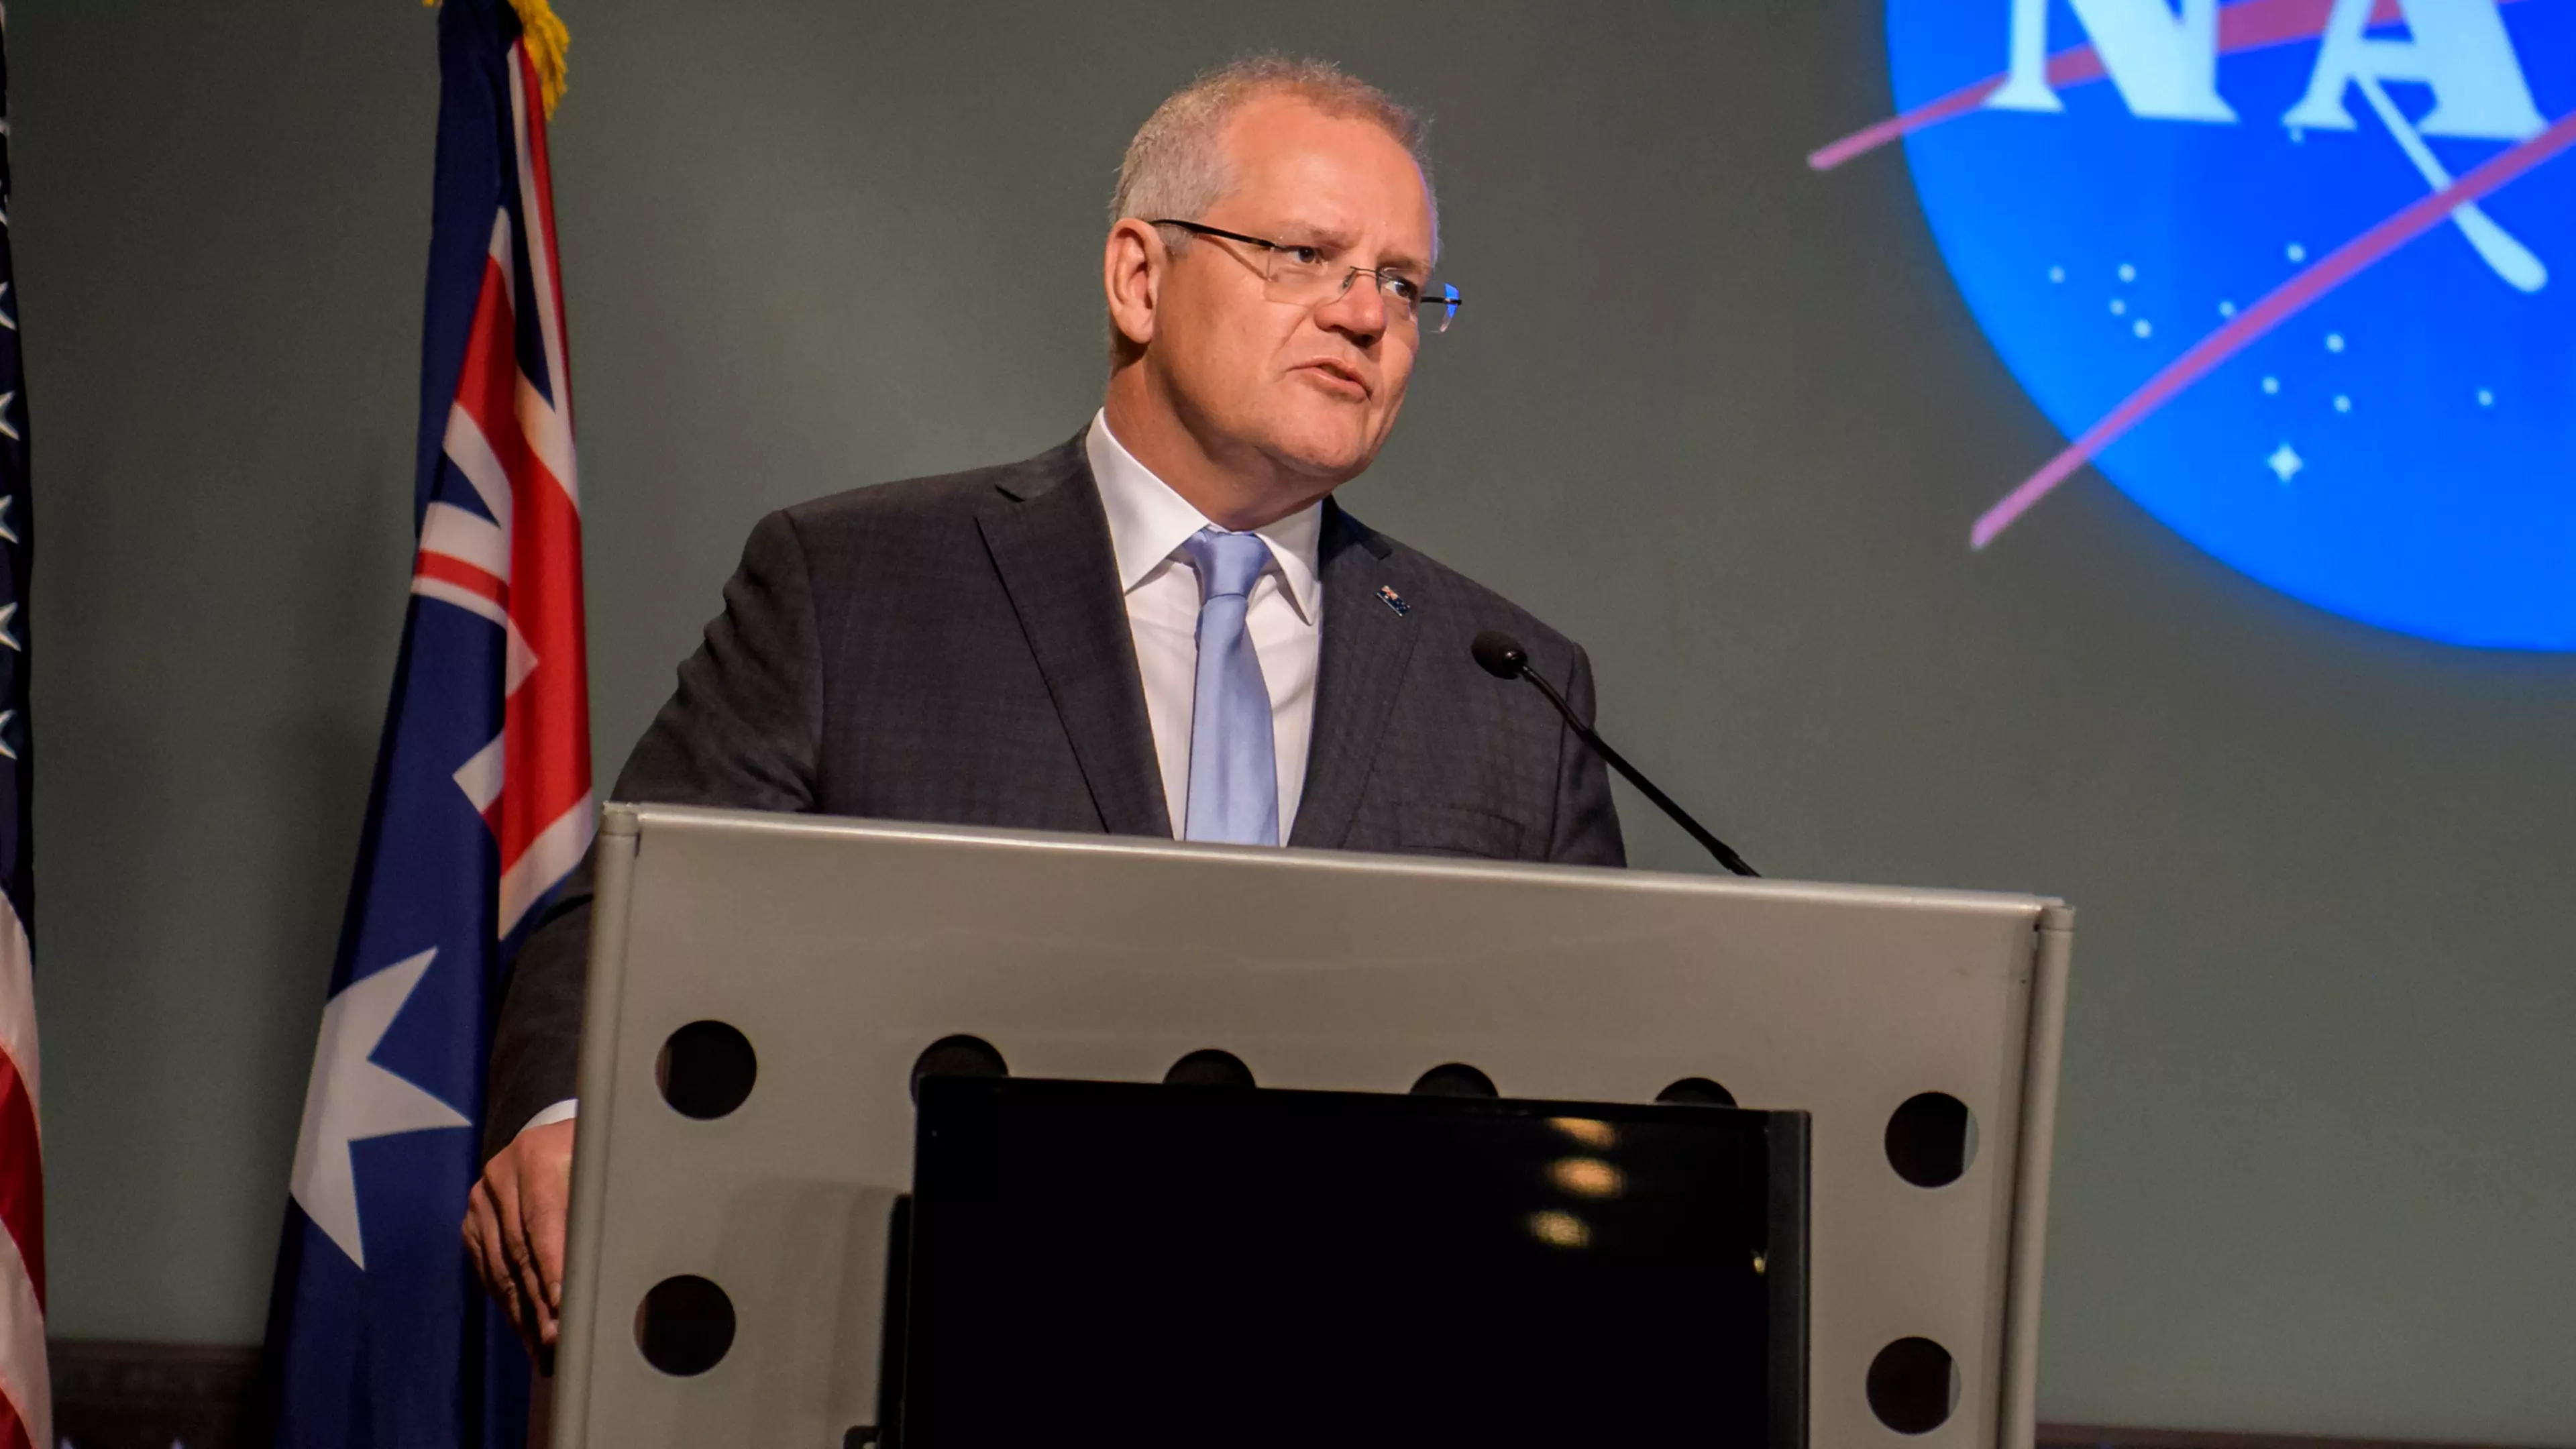 Prime Minister Scott Morrison To Announce $100 Million For Drought Relief